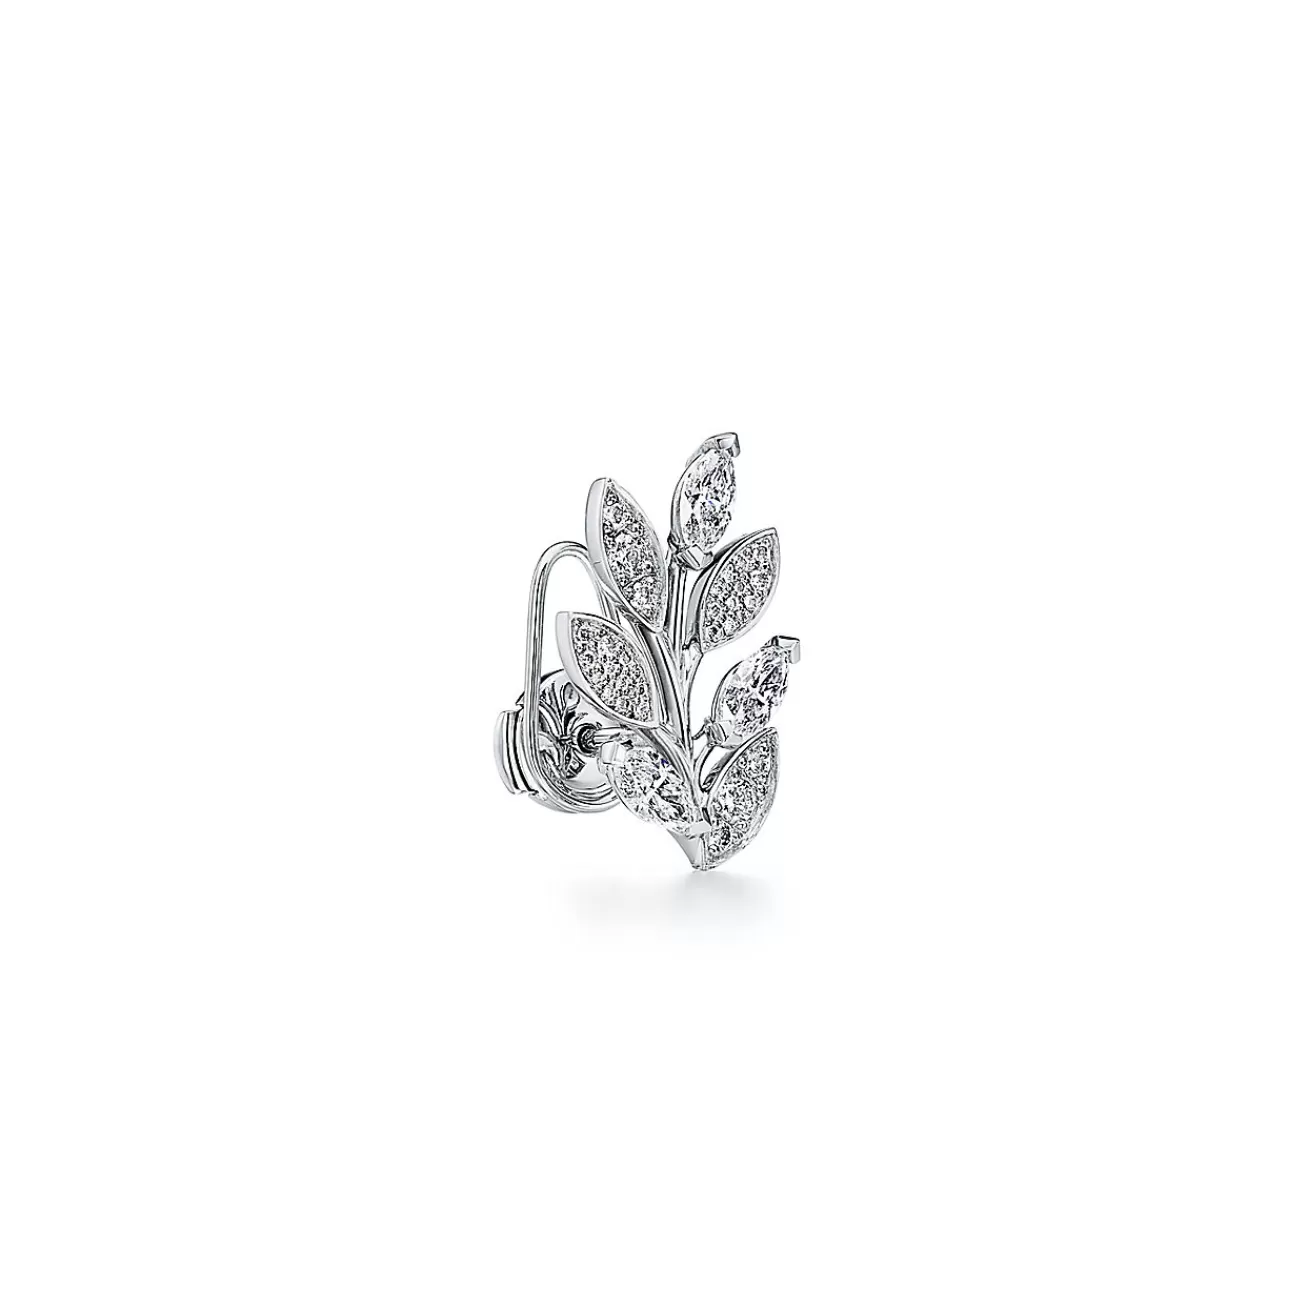 Tiffany & Co. Tiffany Victoria® diamond vine climber earrings in platinum. | ^ Earrings | Platinum Jewelry